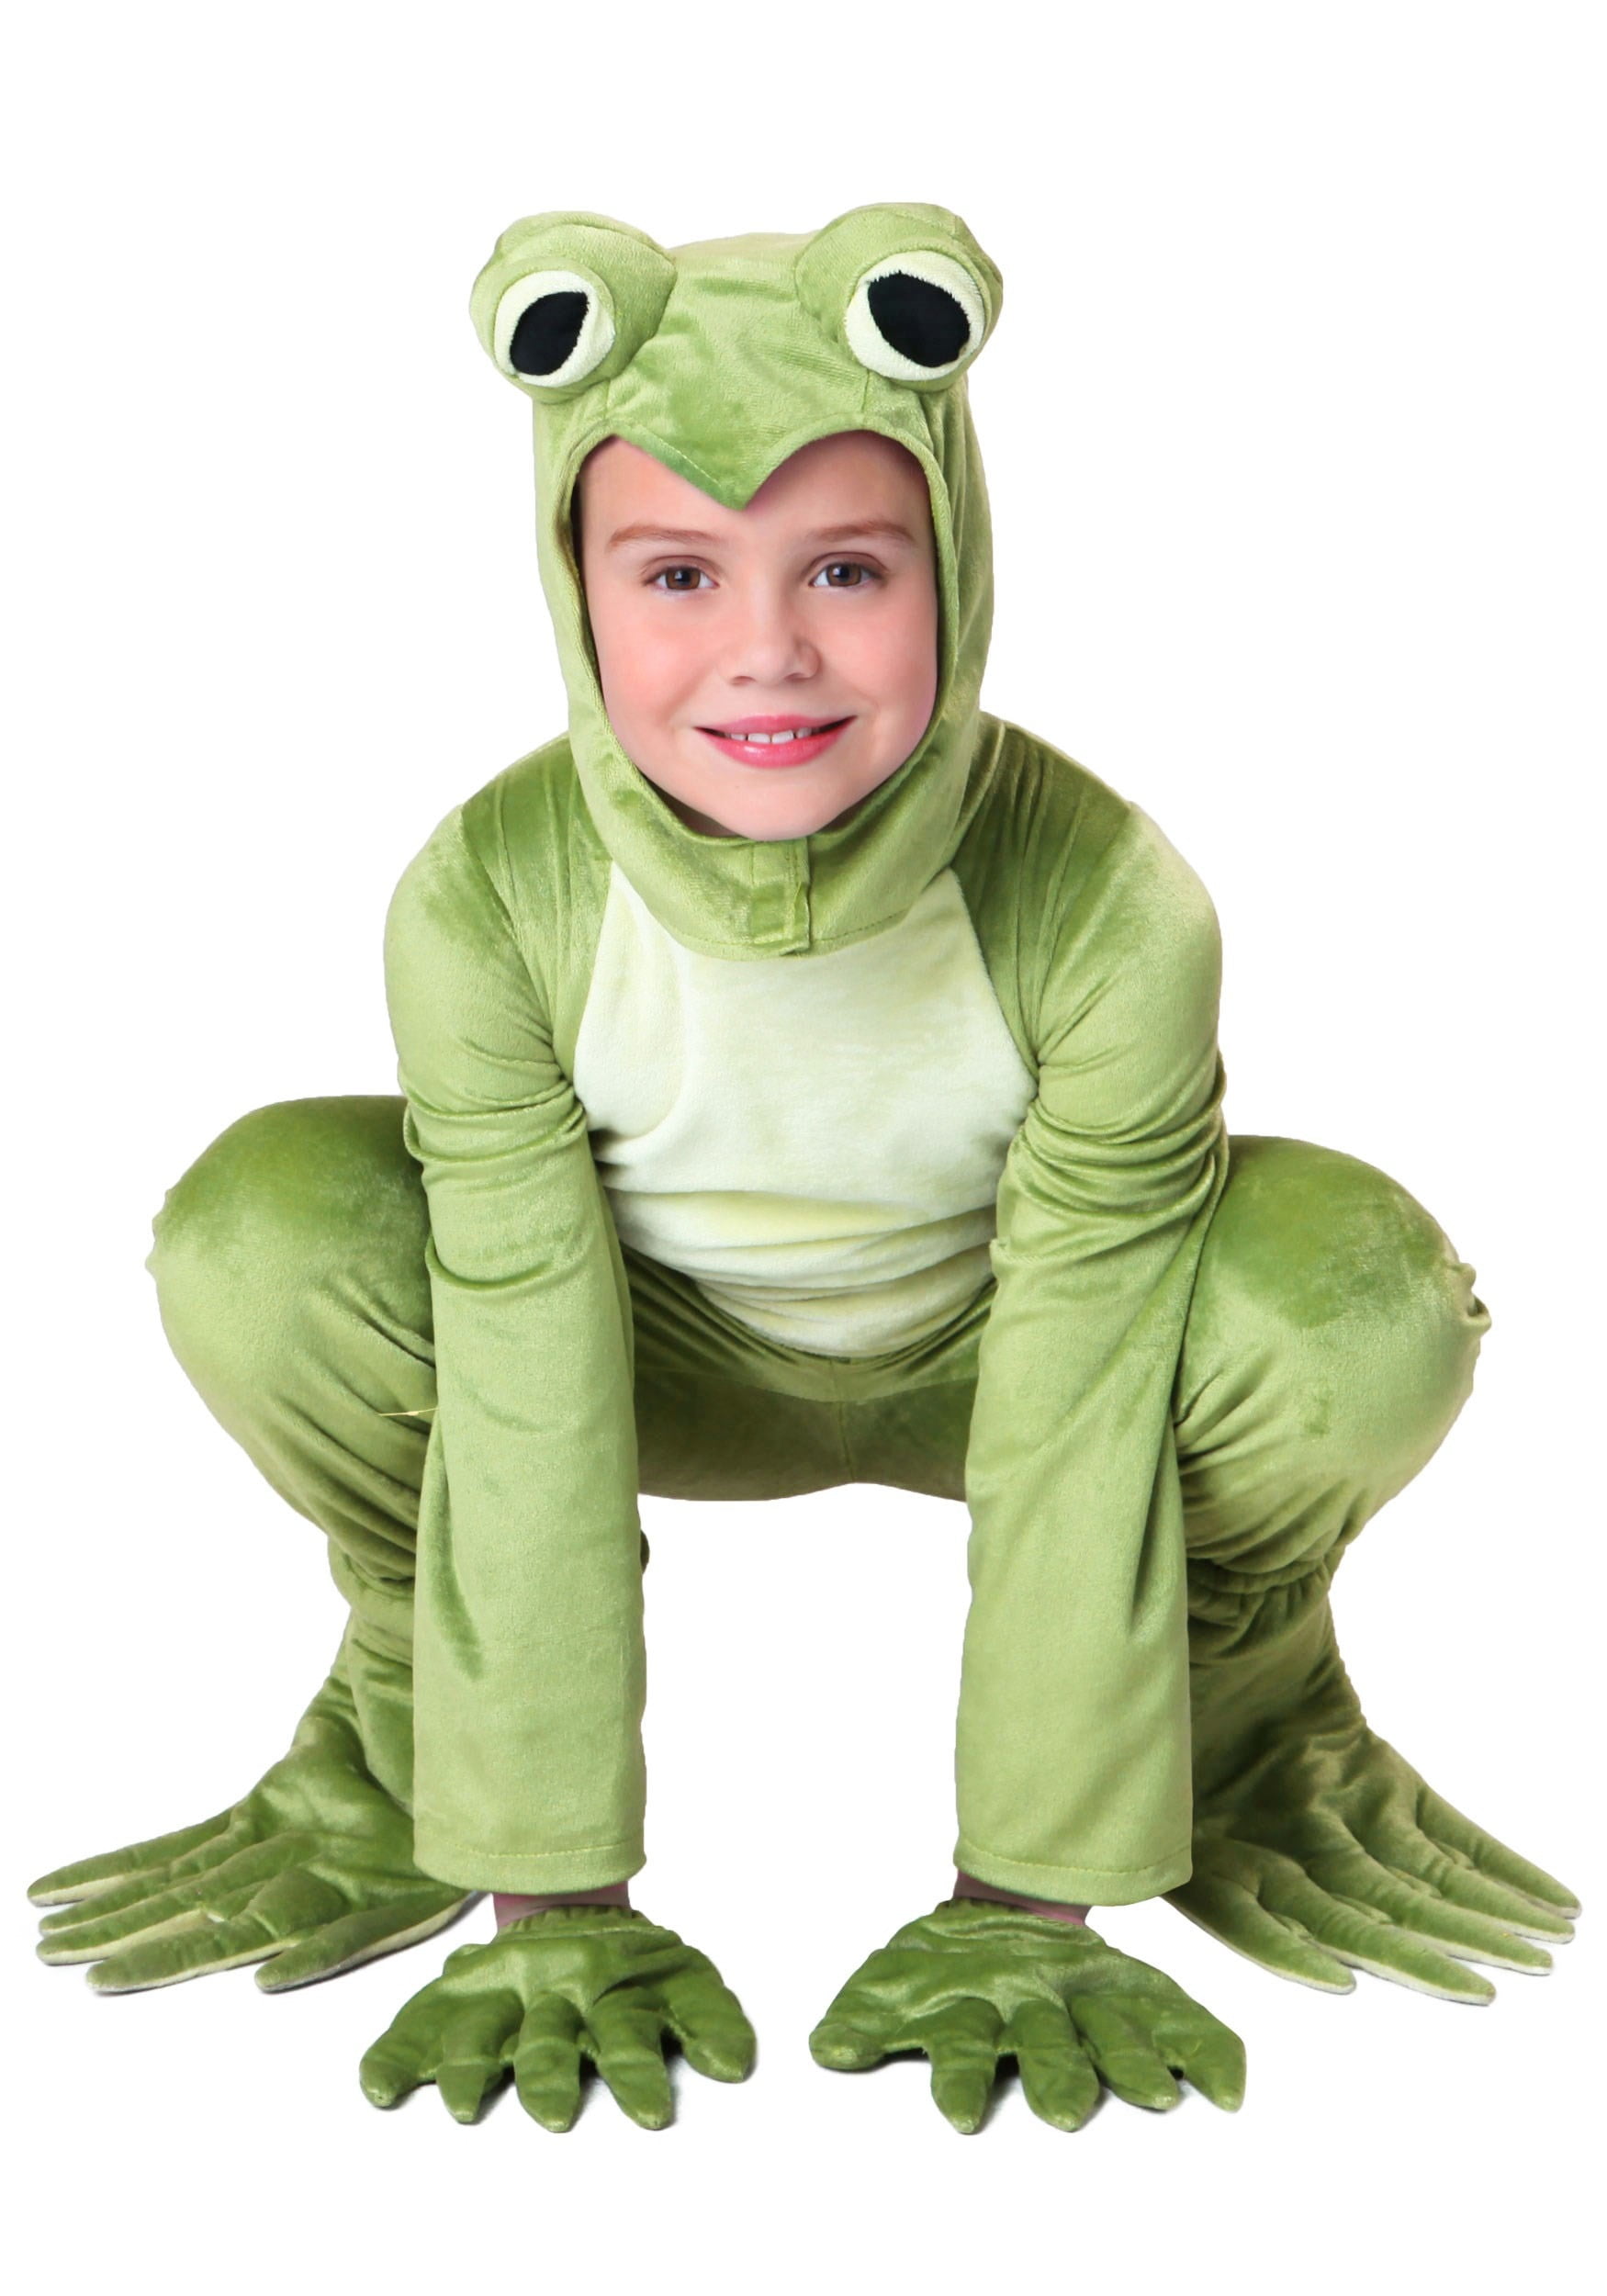 Party King Kids Frog Princess Halloween Costume Plush Animal Kit 